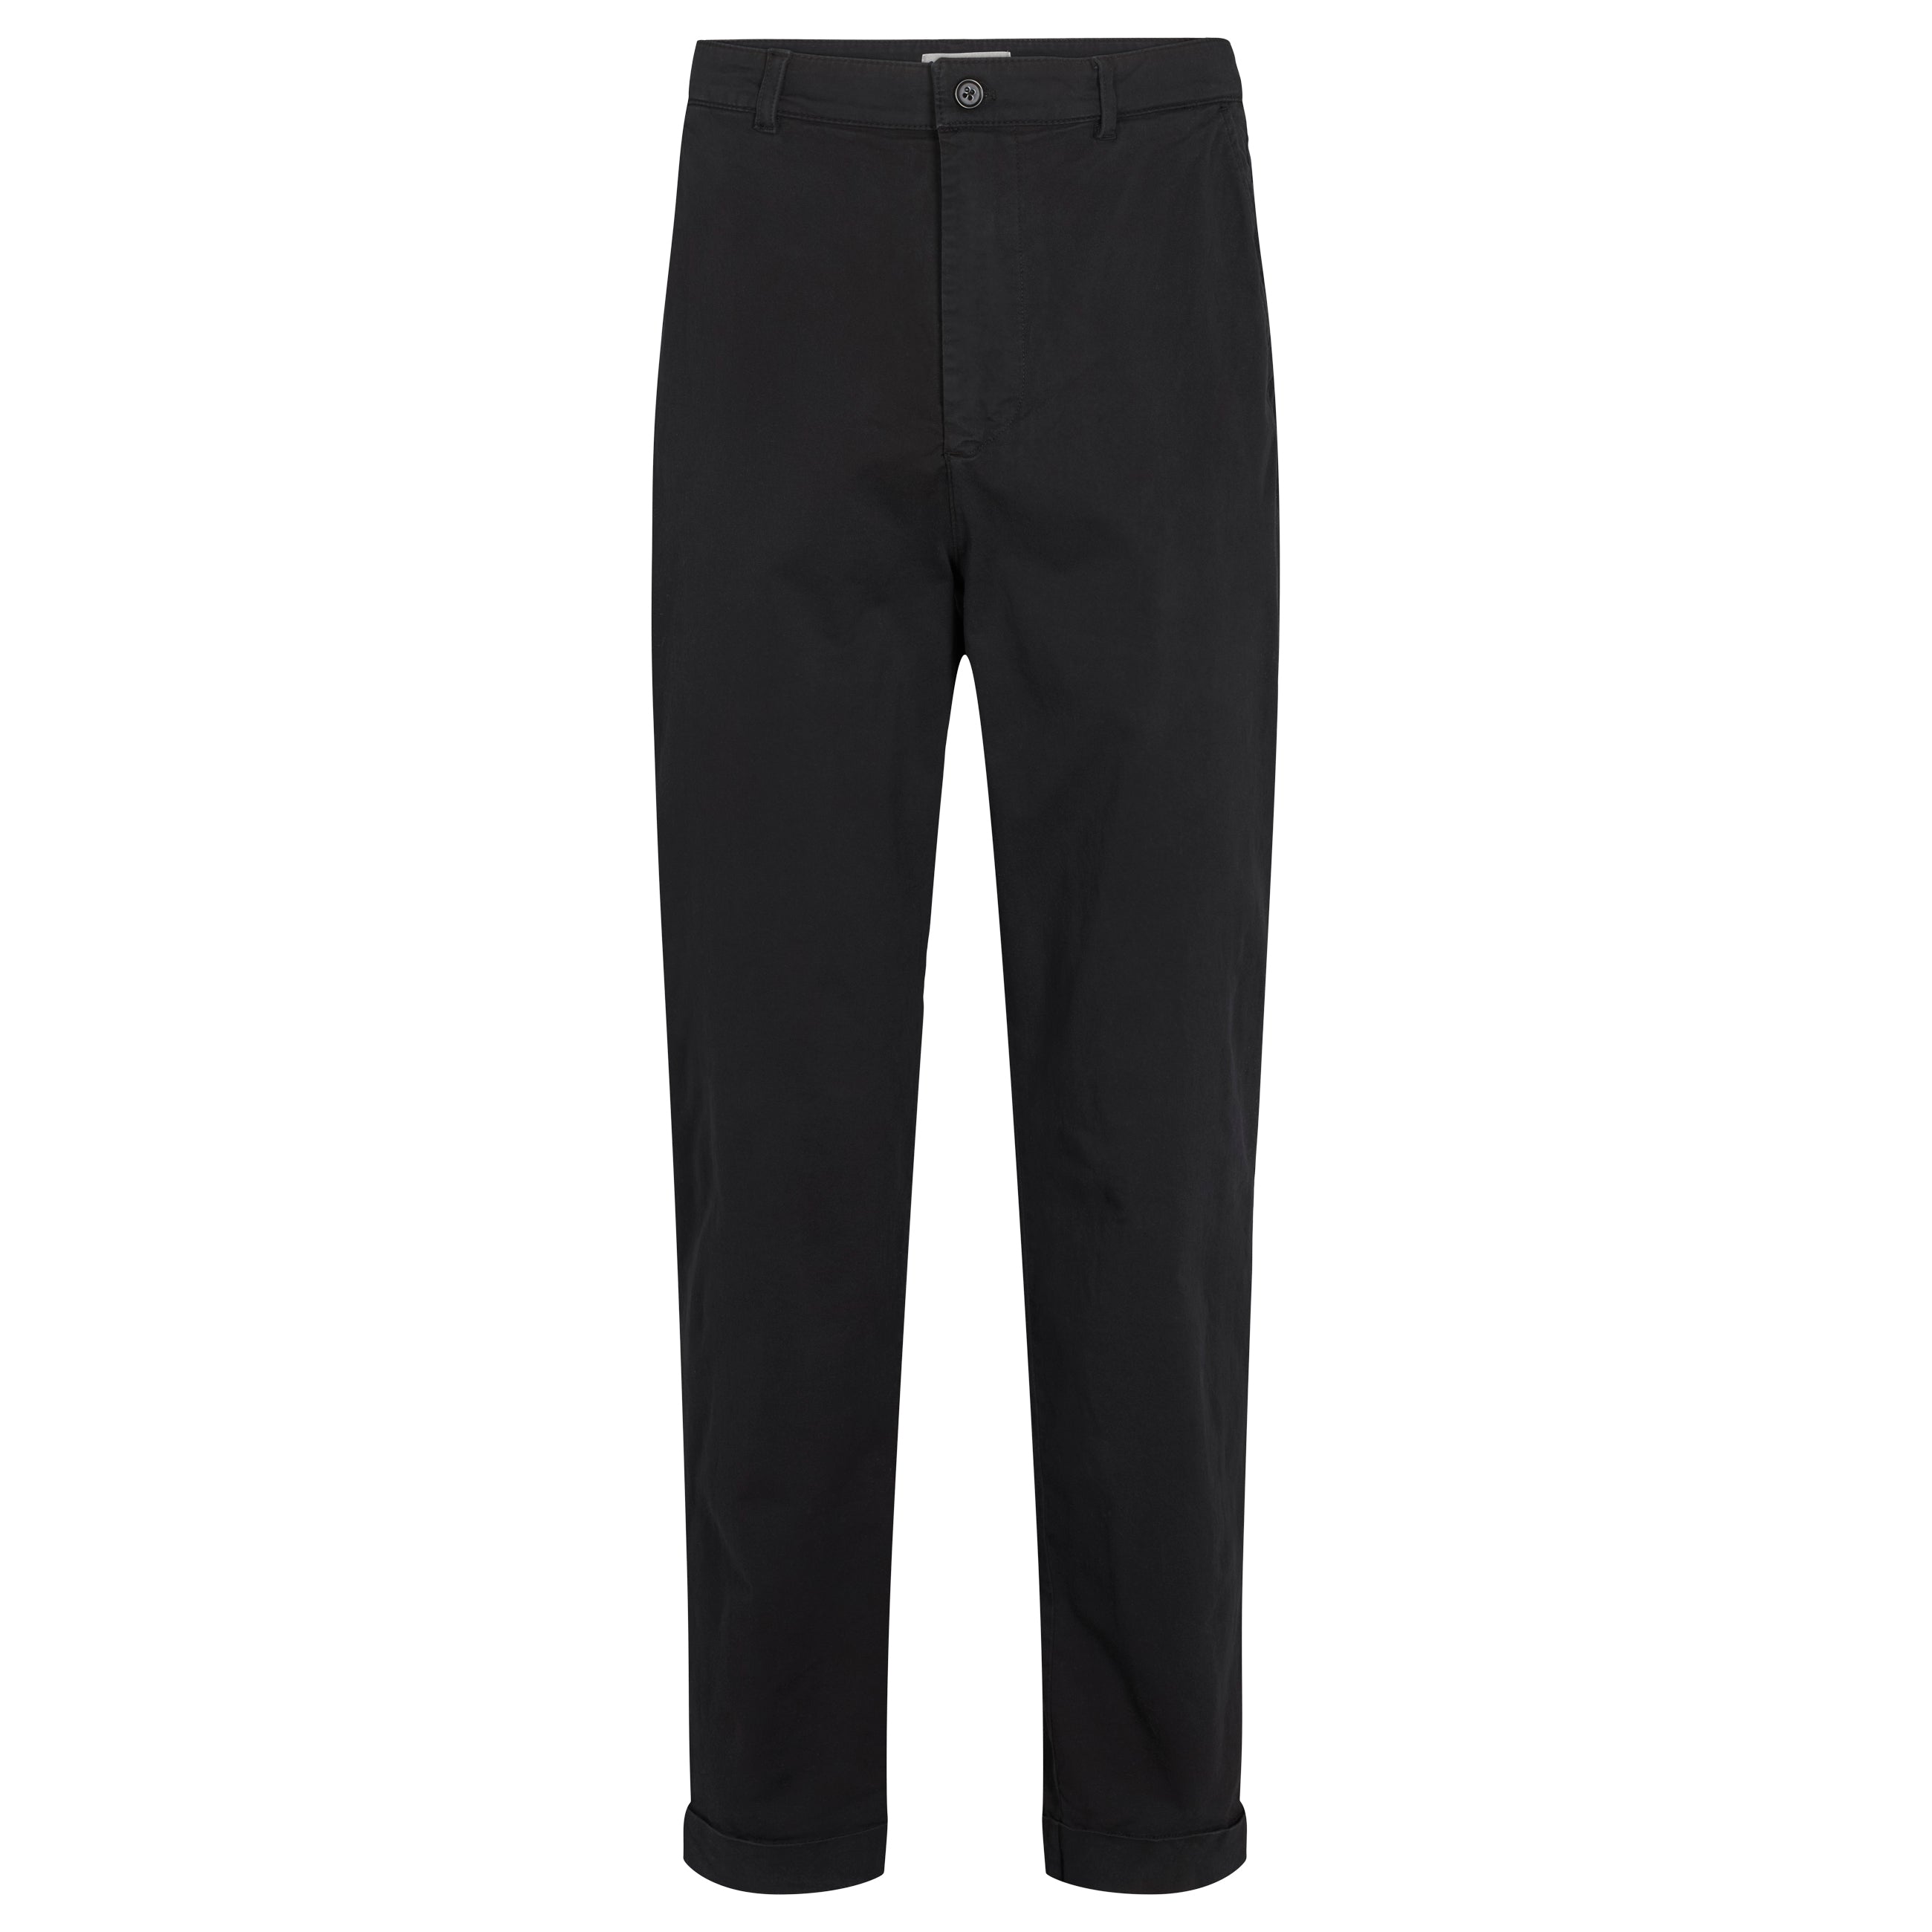 By Garment Makers Filip Organic Cotton Pant GOTS Pants 1204 Jet Black